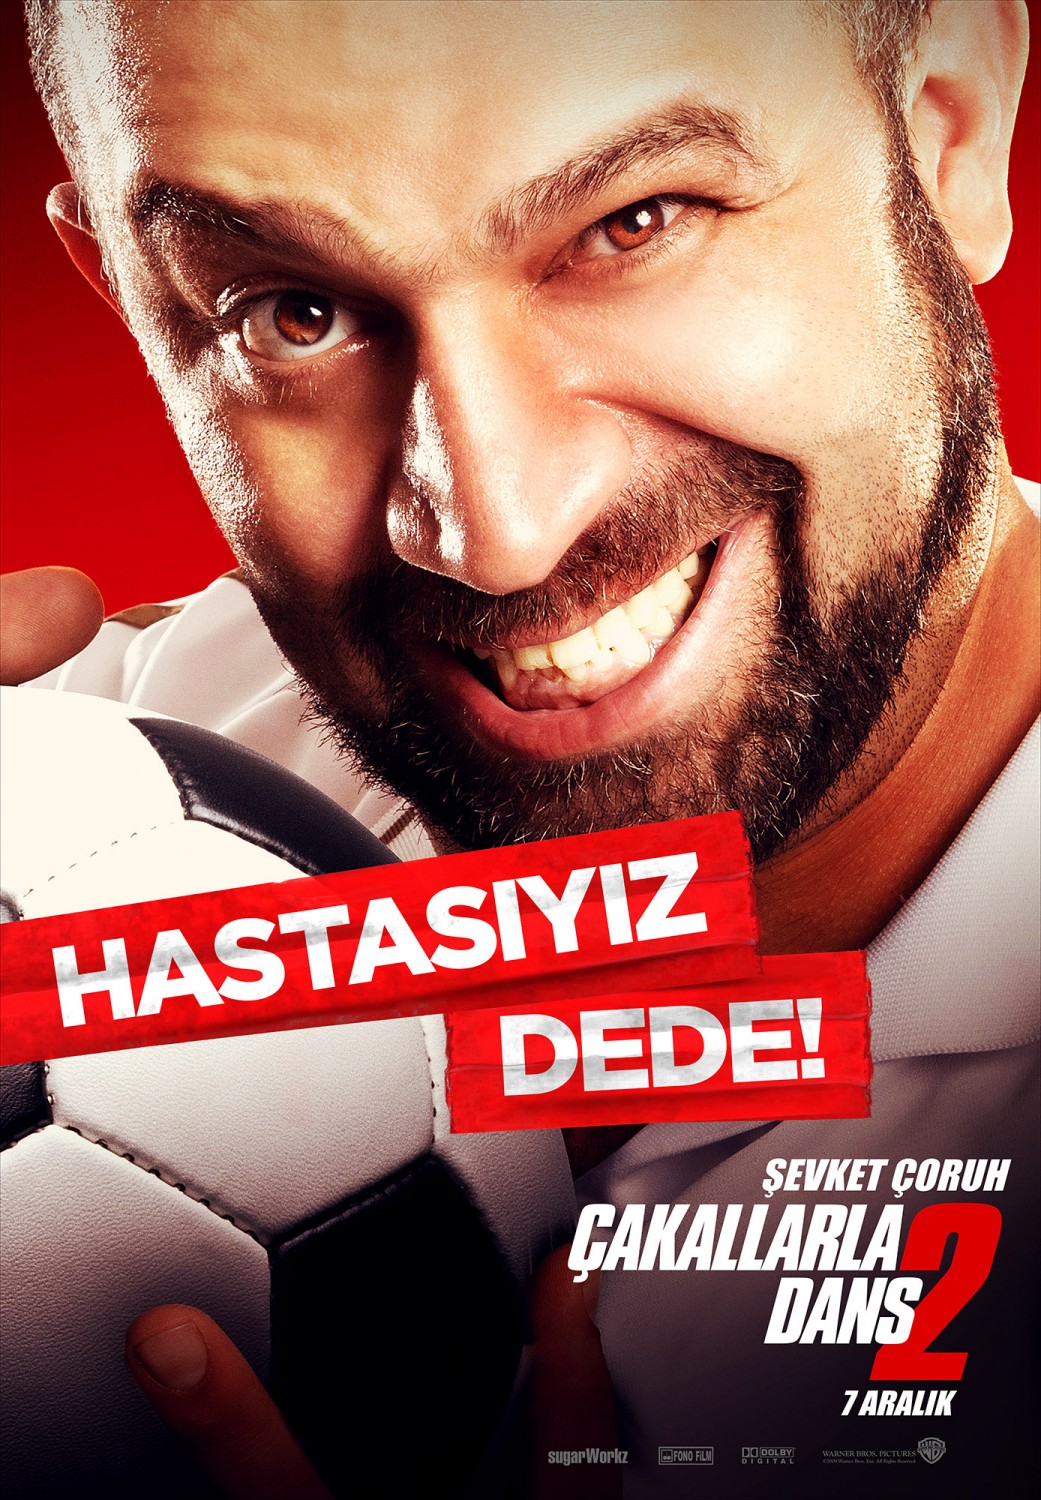 Extra Large Movie Poster Image for Çakallarla dans 2 (#7 of 9)